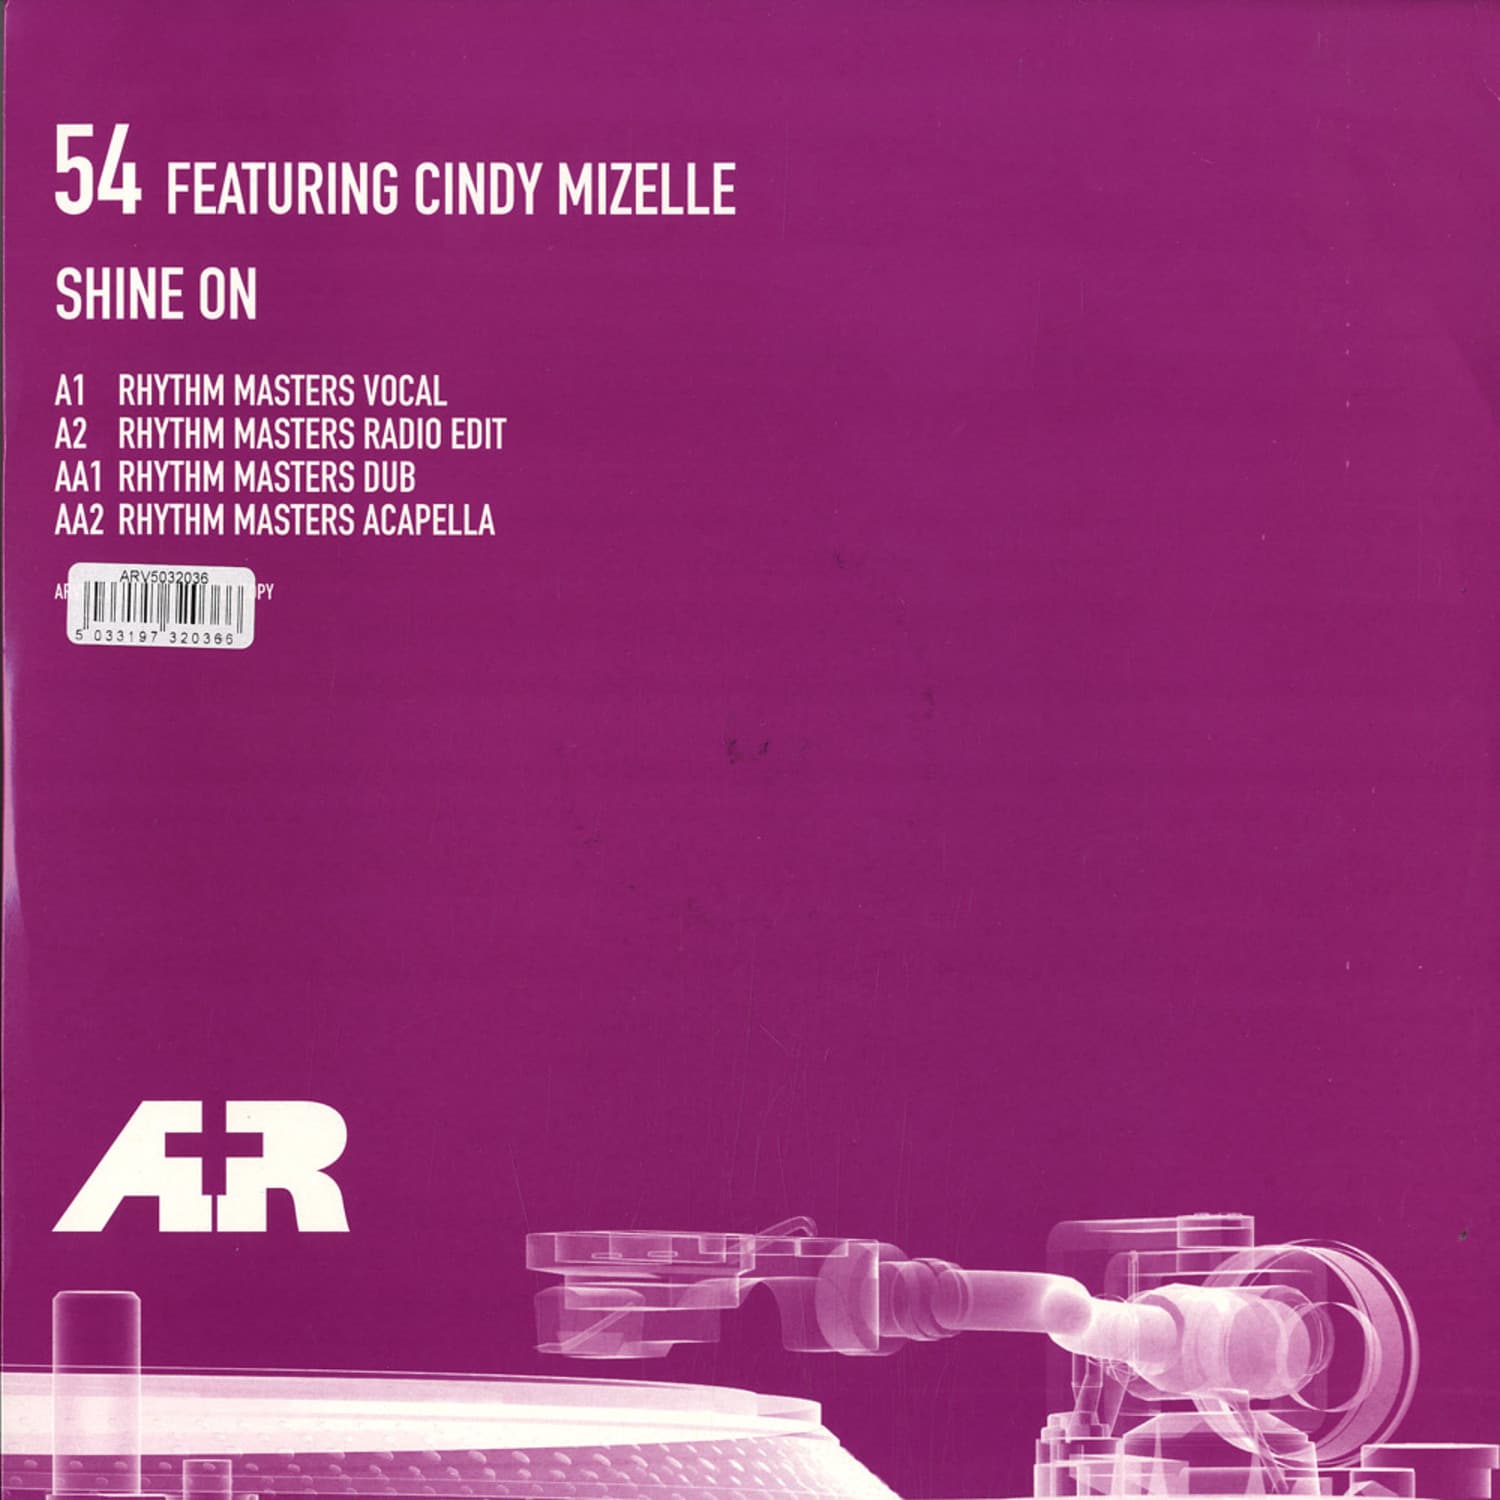 54 feat. Cindy Mizelle - SHINE ON